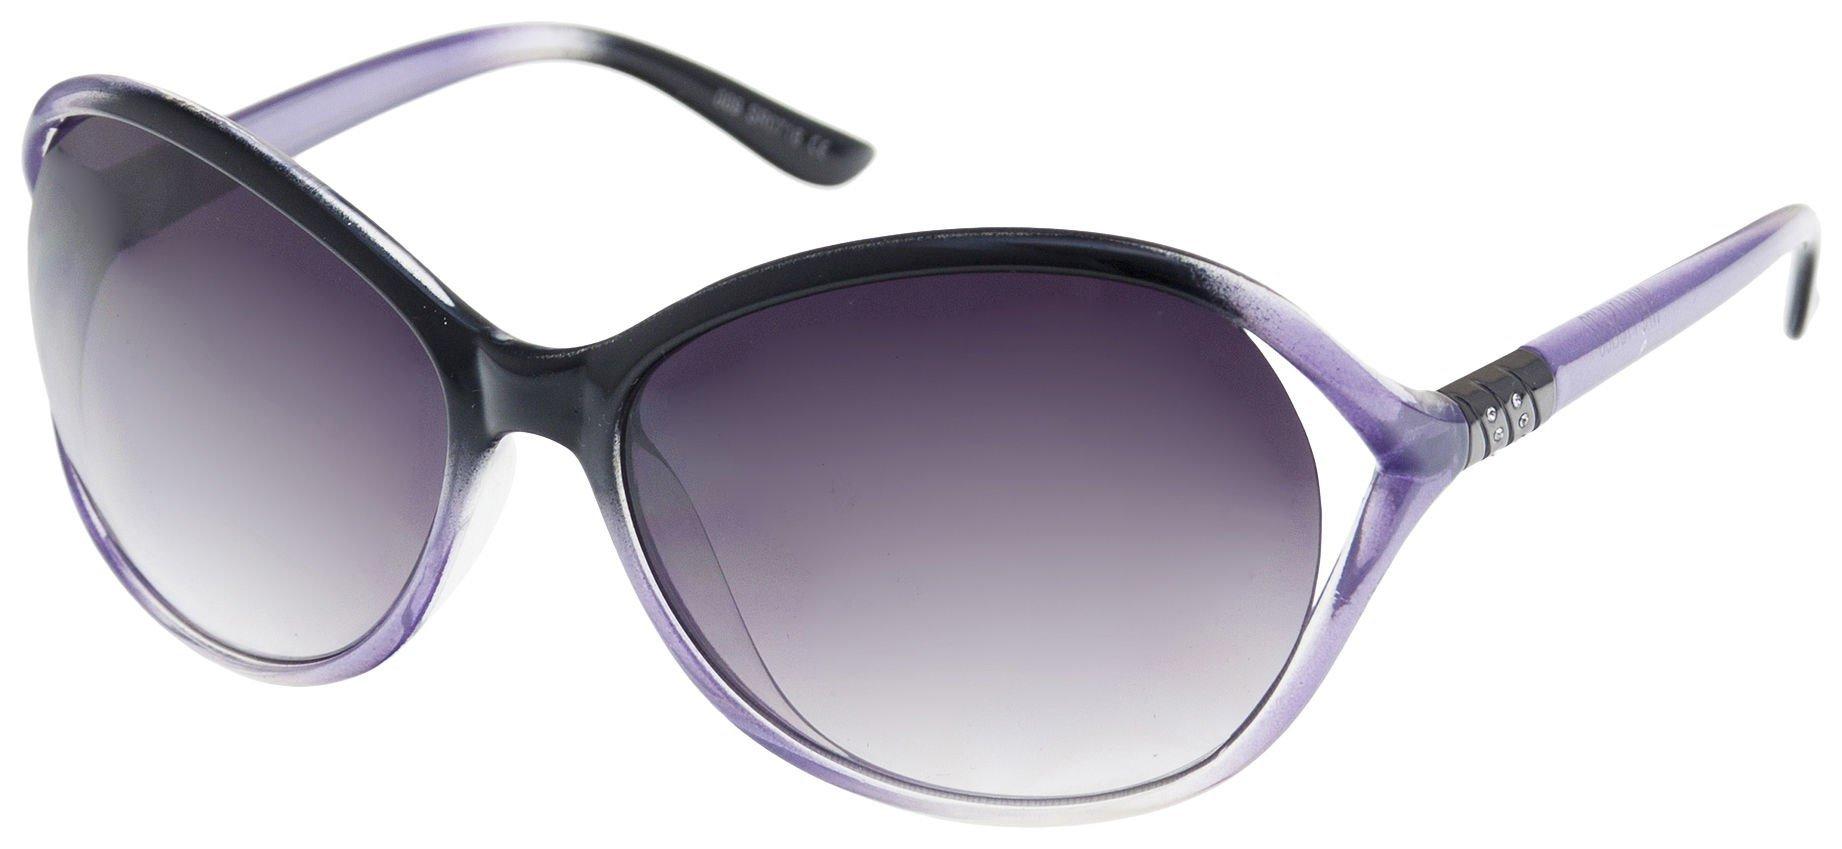 Women's Sunglasses | Sunglasses for Women | Bealls Florida